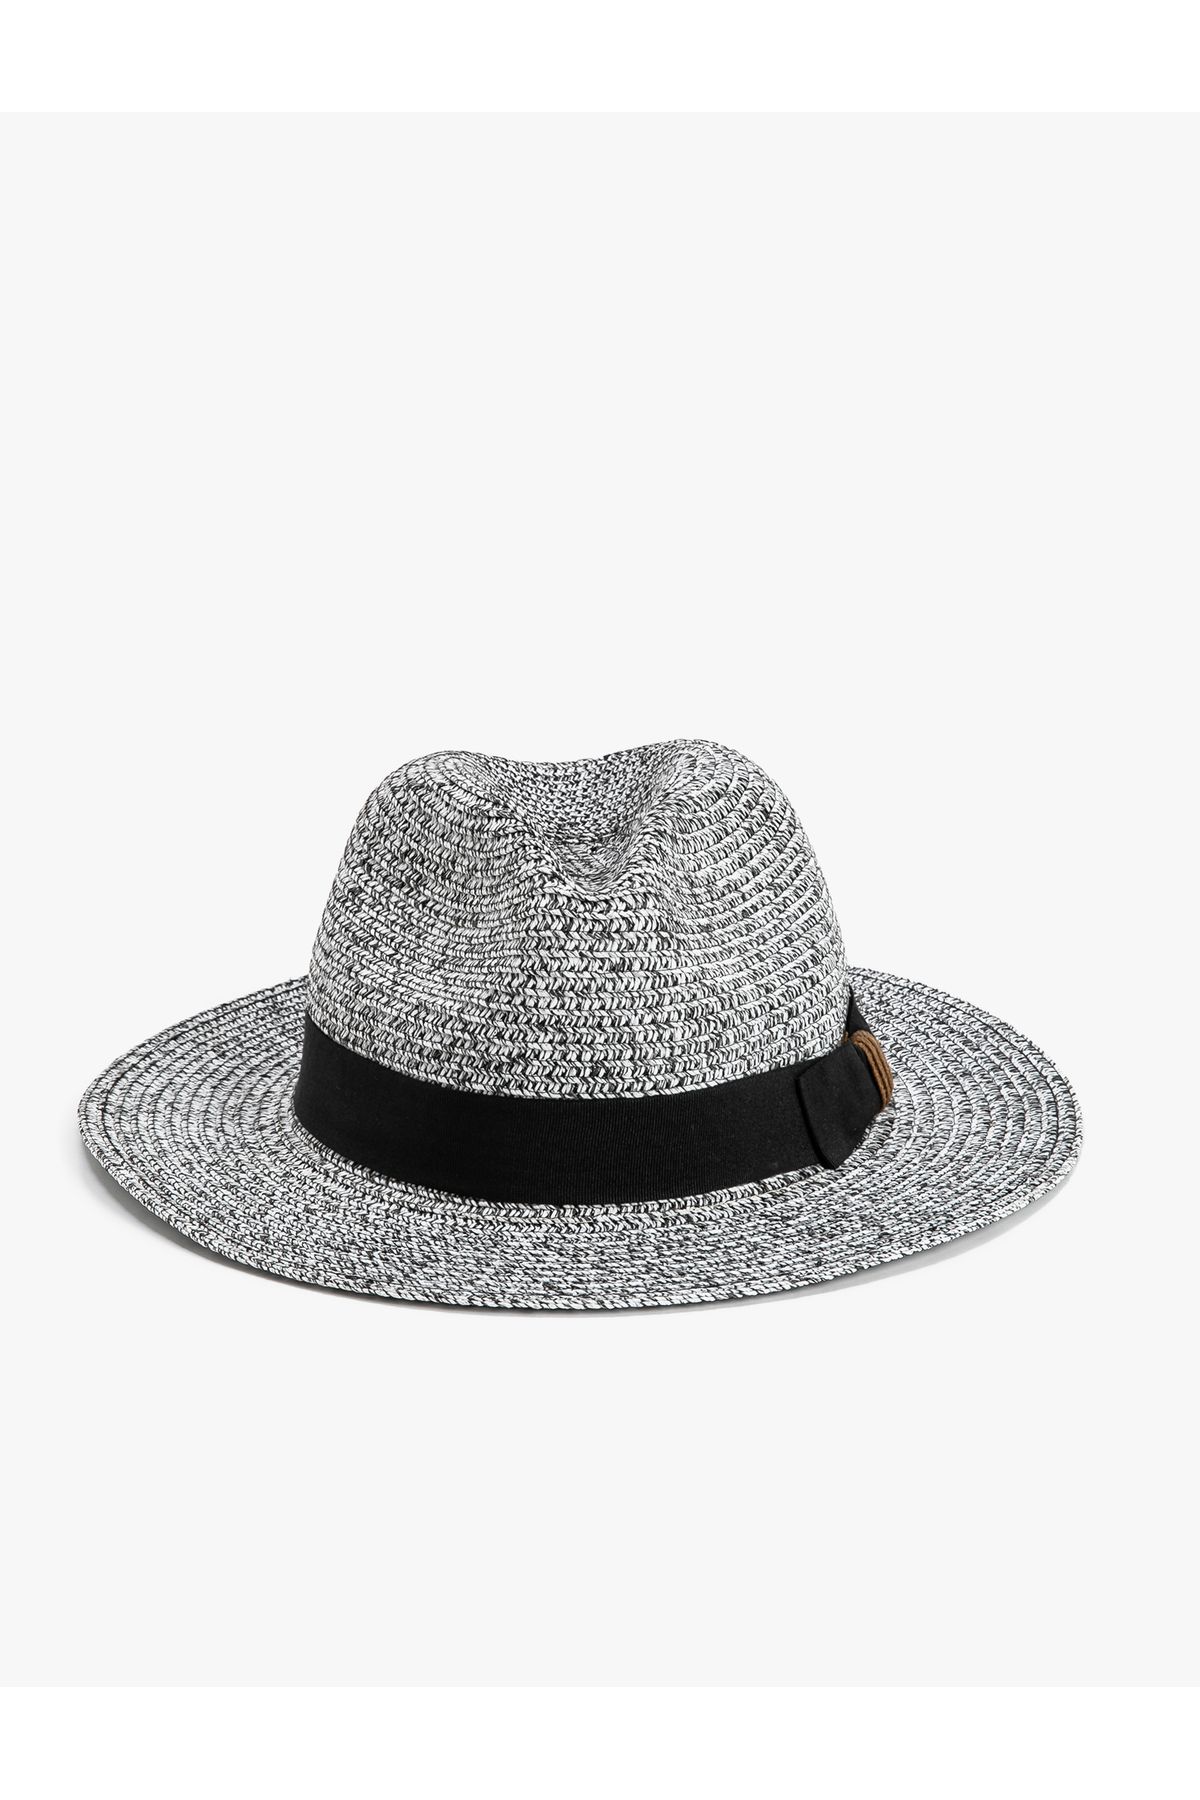 Koton Hasır Şapka Bant Detaylı Örgü Motifli